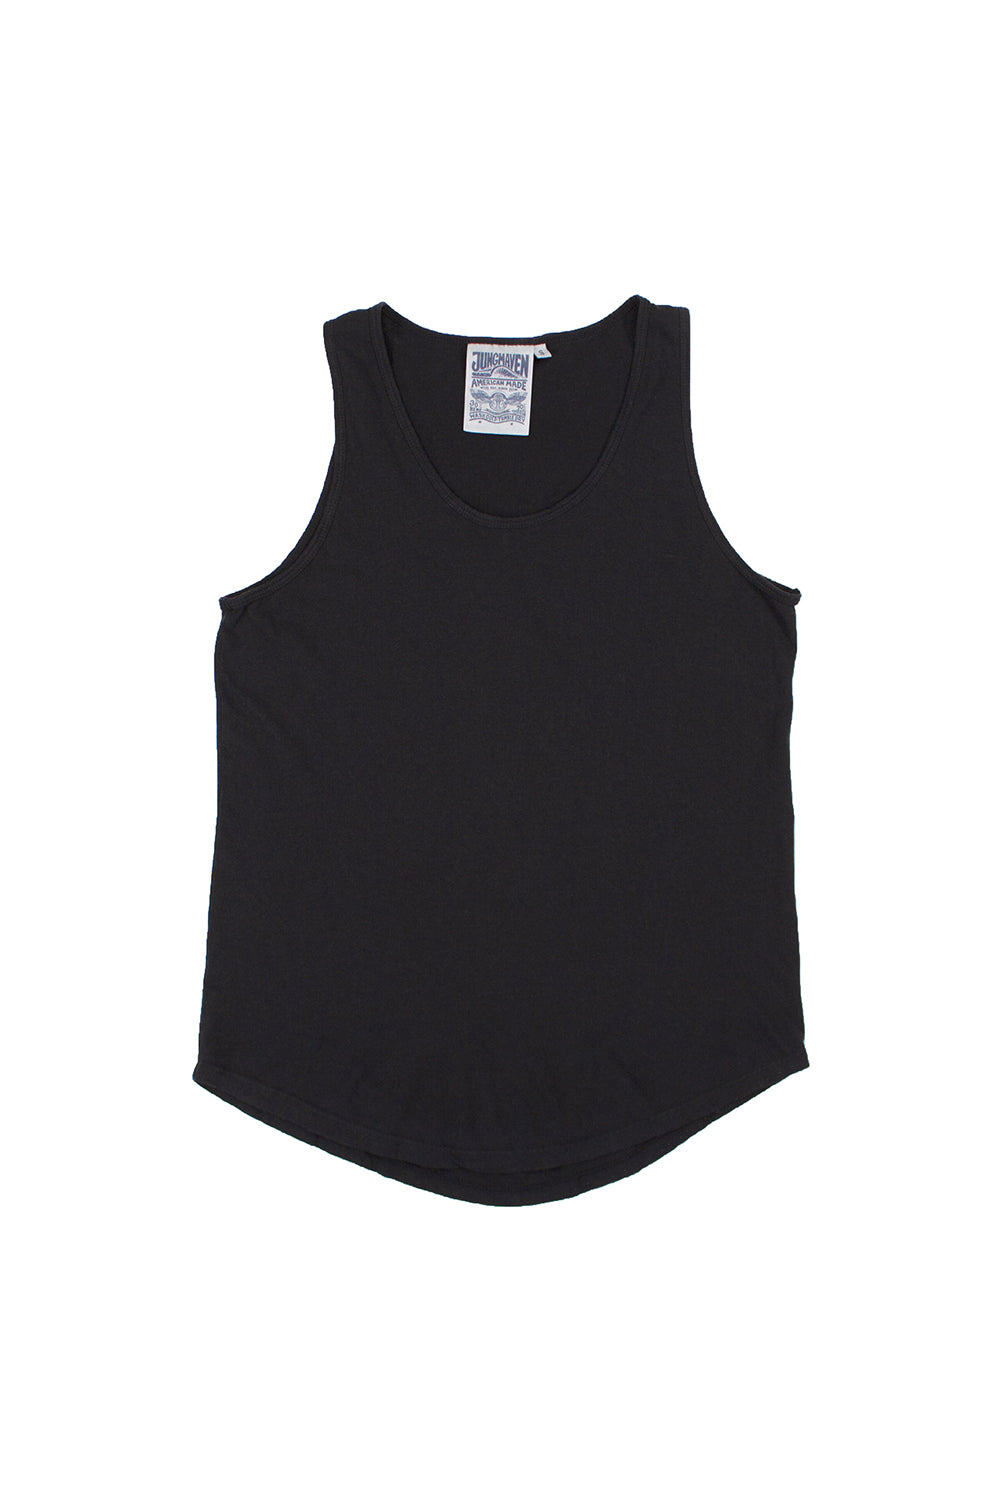 Truro Tank Top | Jungmaven Hemp Clothing & Accessories / Color: Black